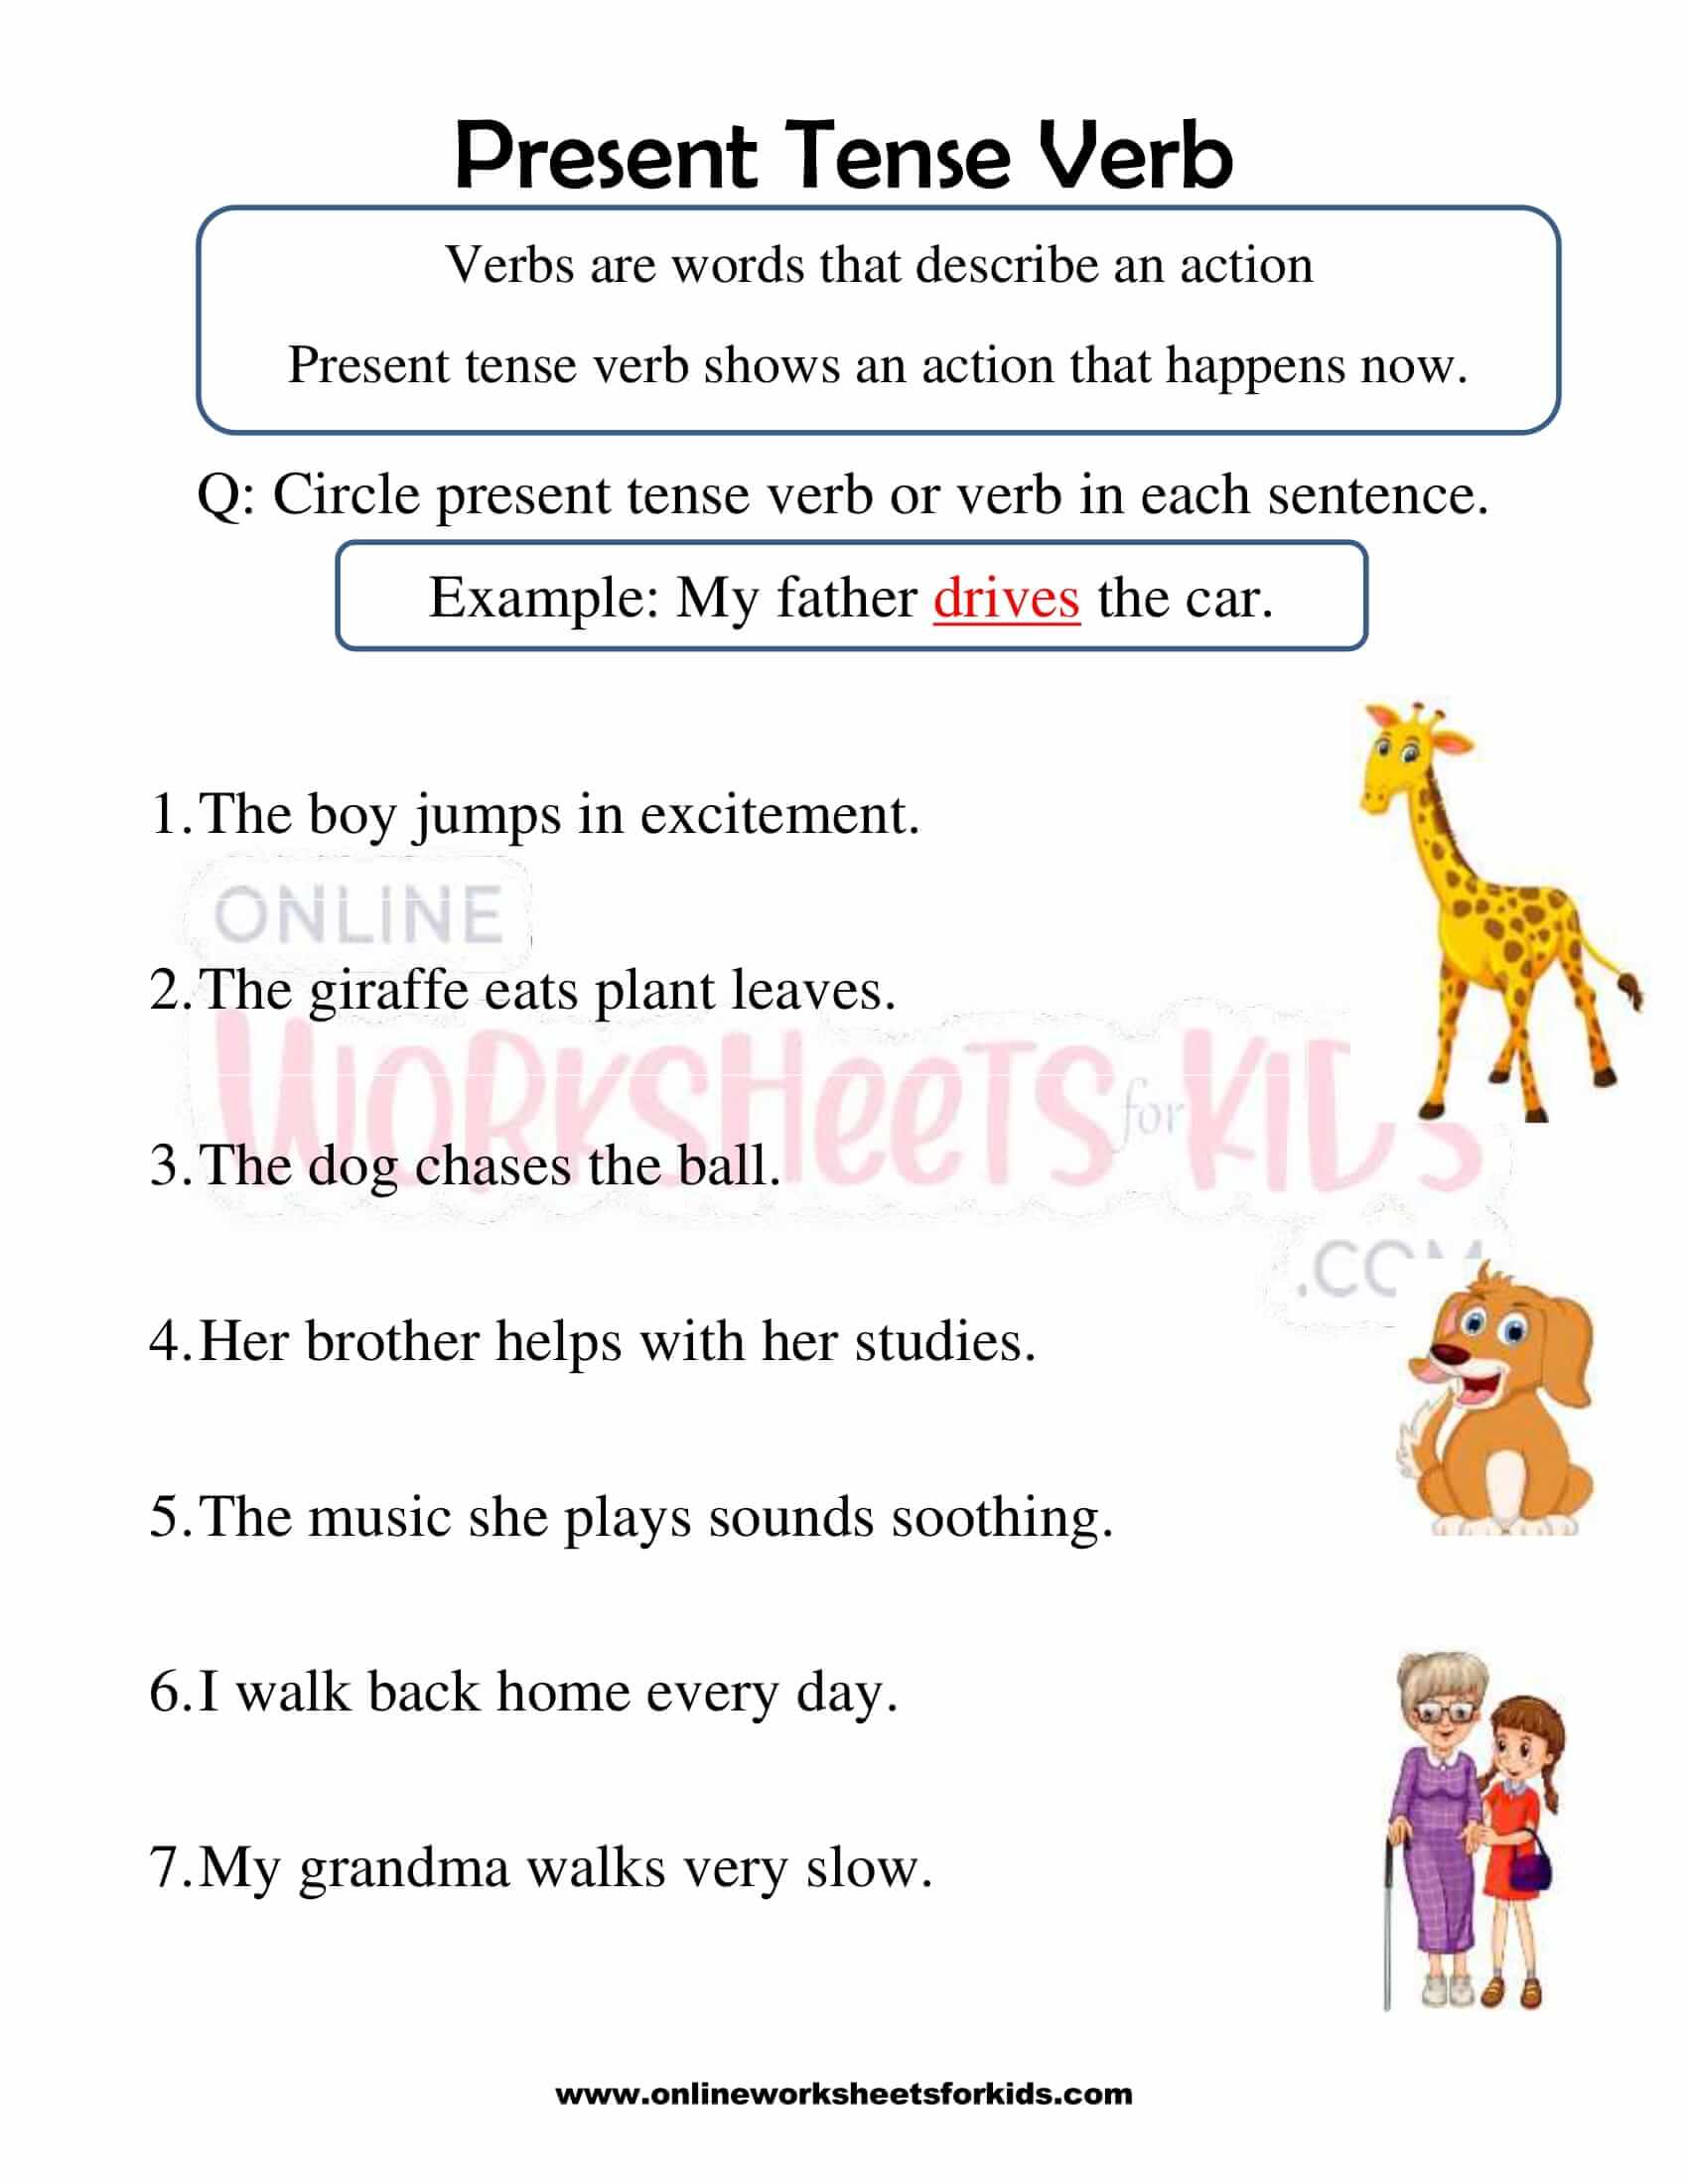 present-tense-verb-worksheet-1st-grade-3